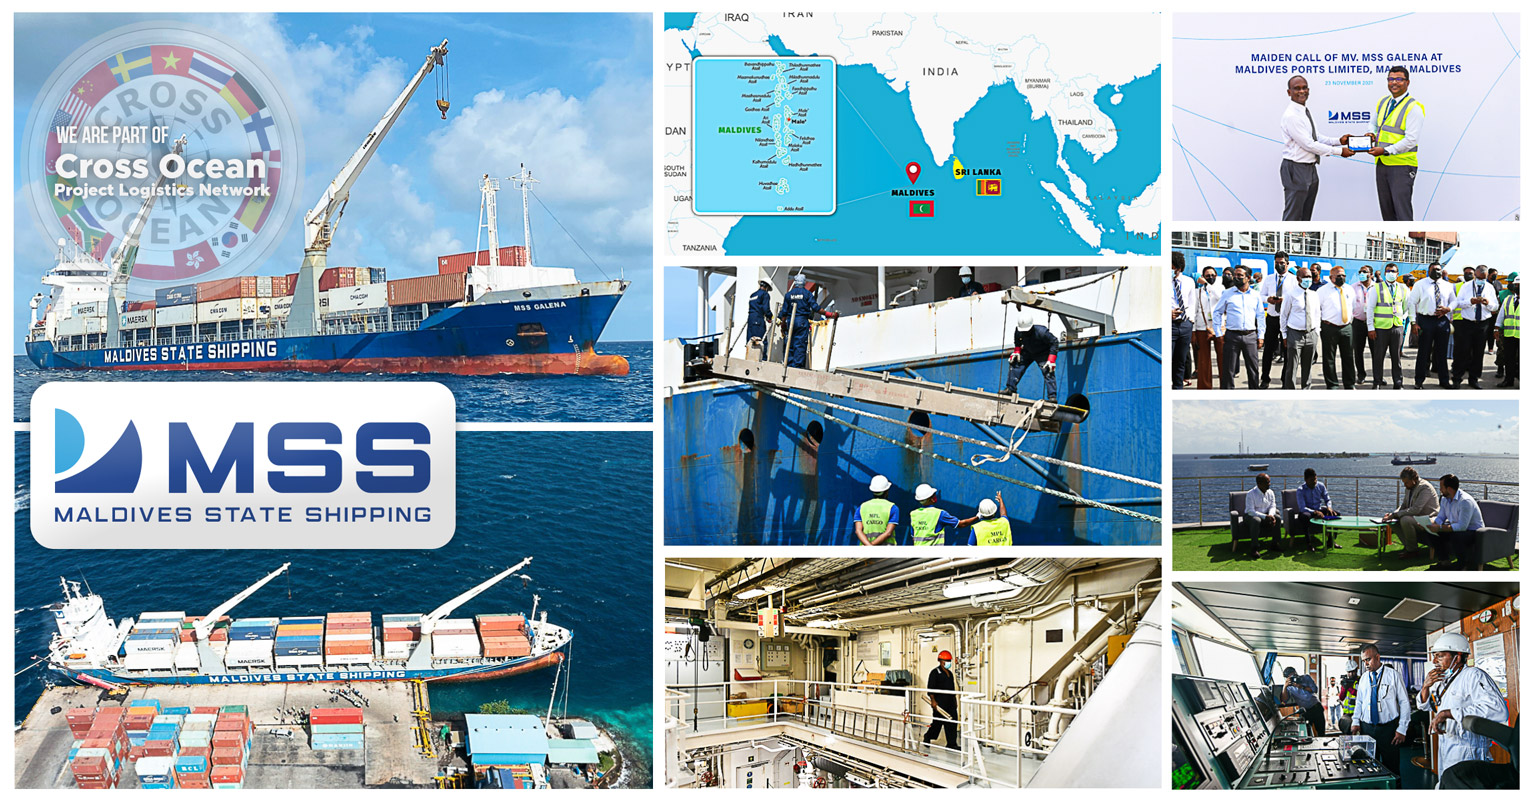 New Member Representing Maldives and Sri Lanka – Maldives State Shipping